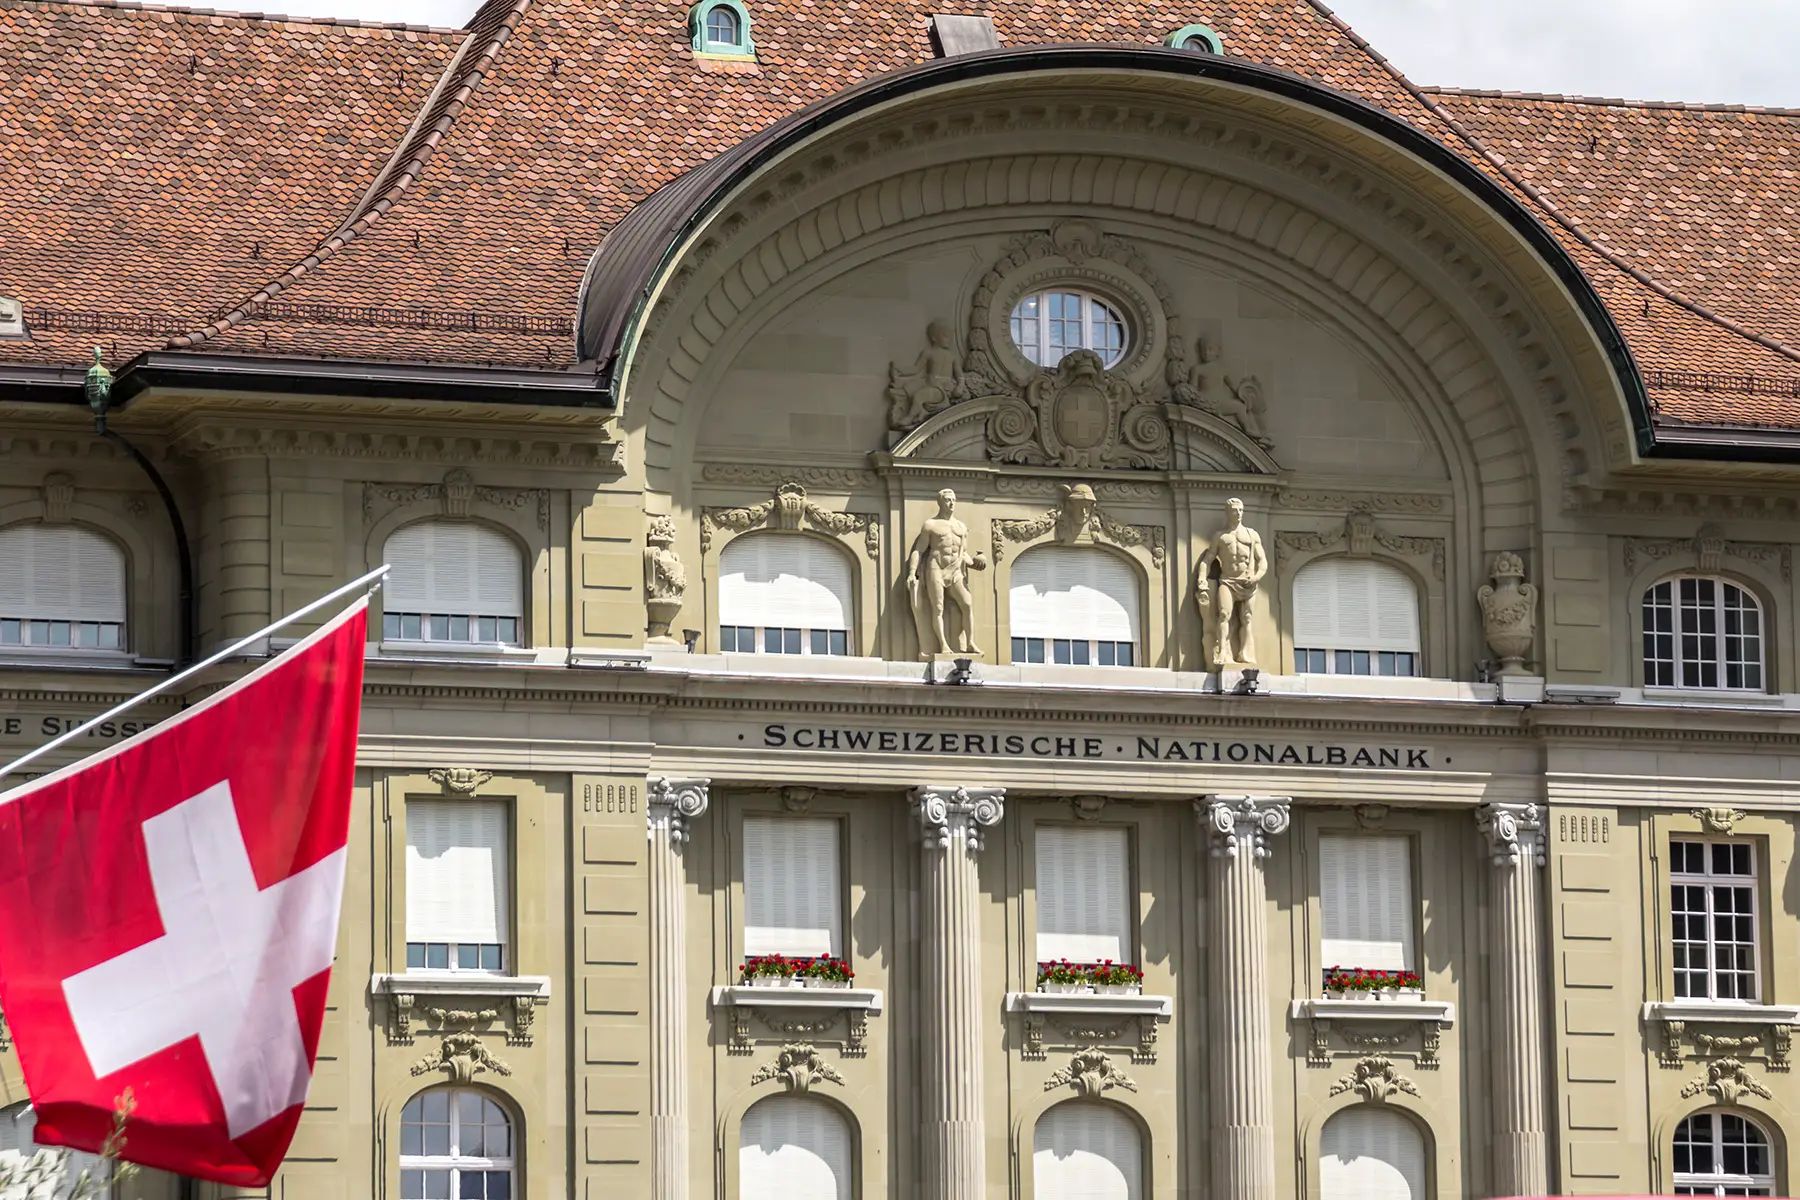 Switzerland National Bank building